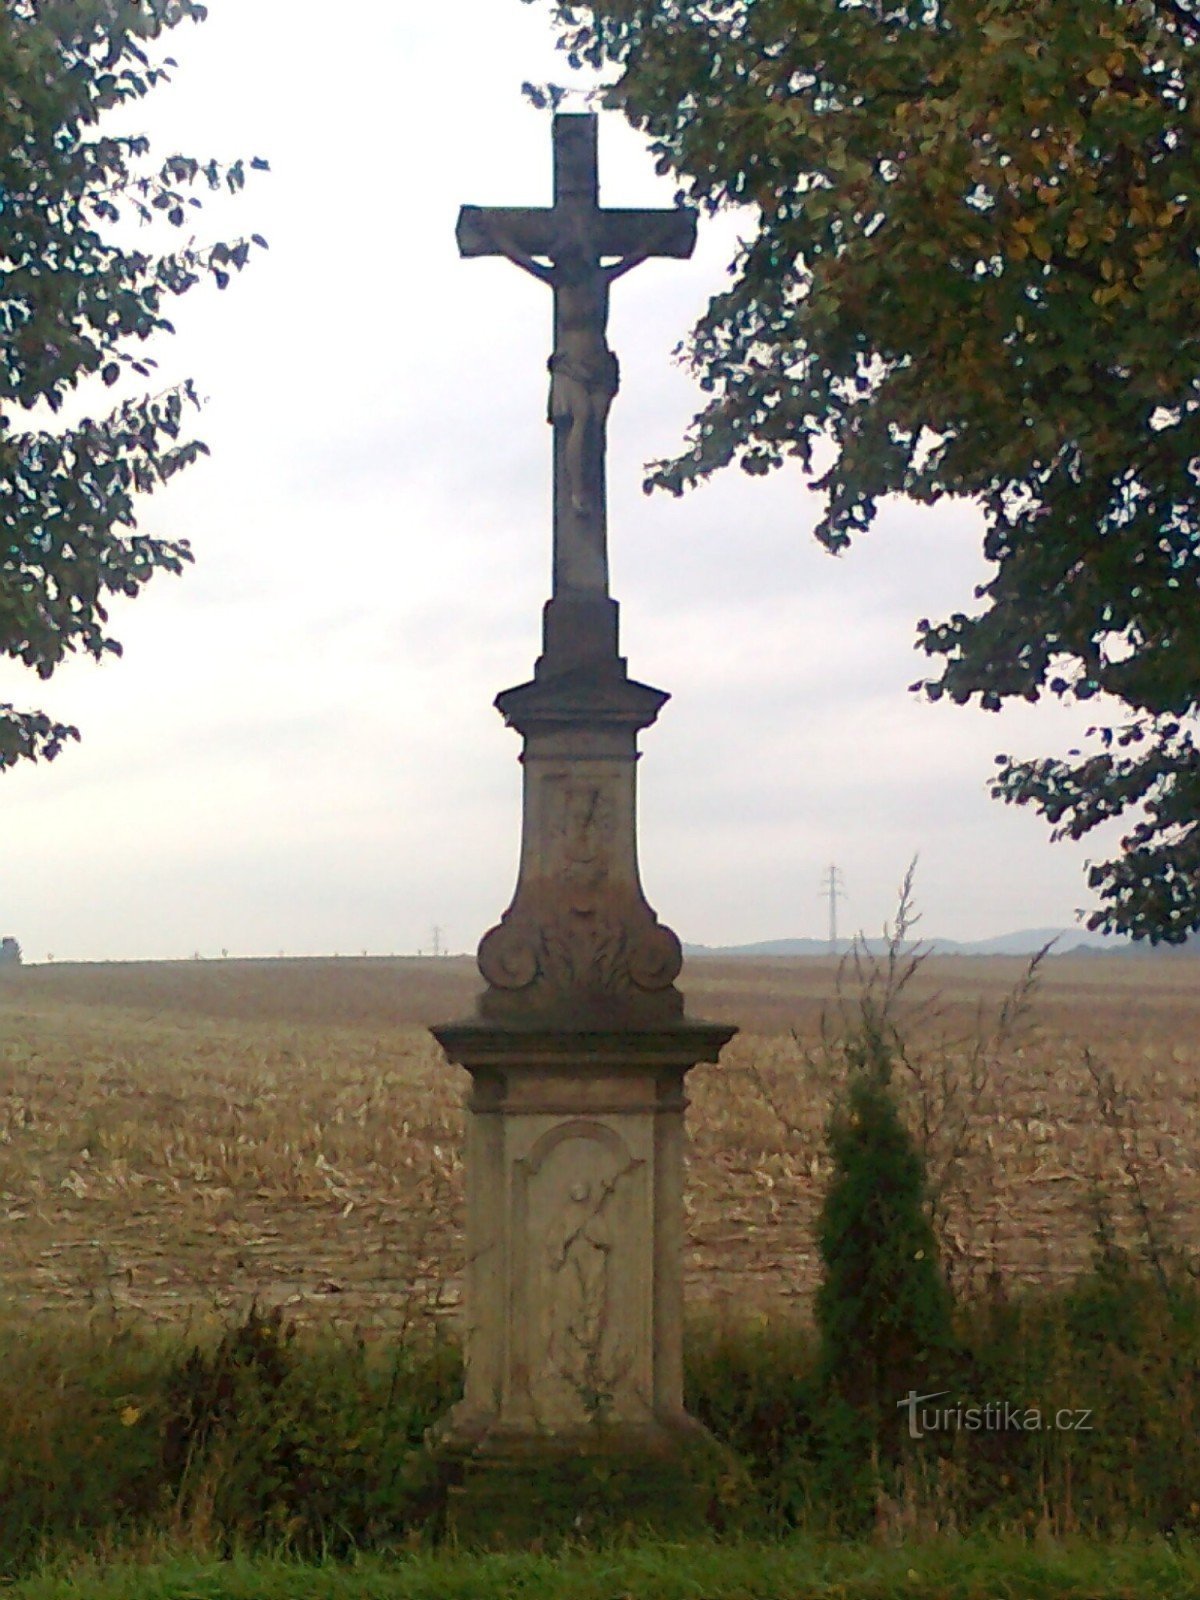 Úsov - croix de pierre sur la route Úsov - Stavenice